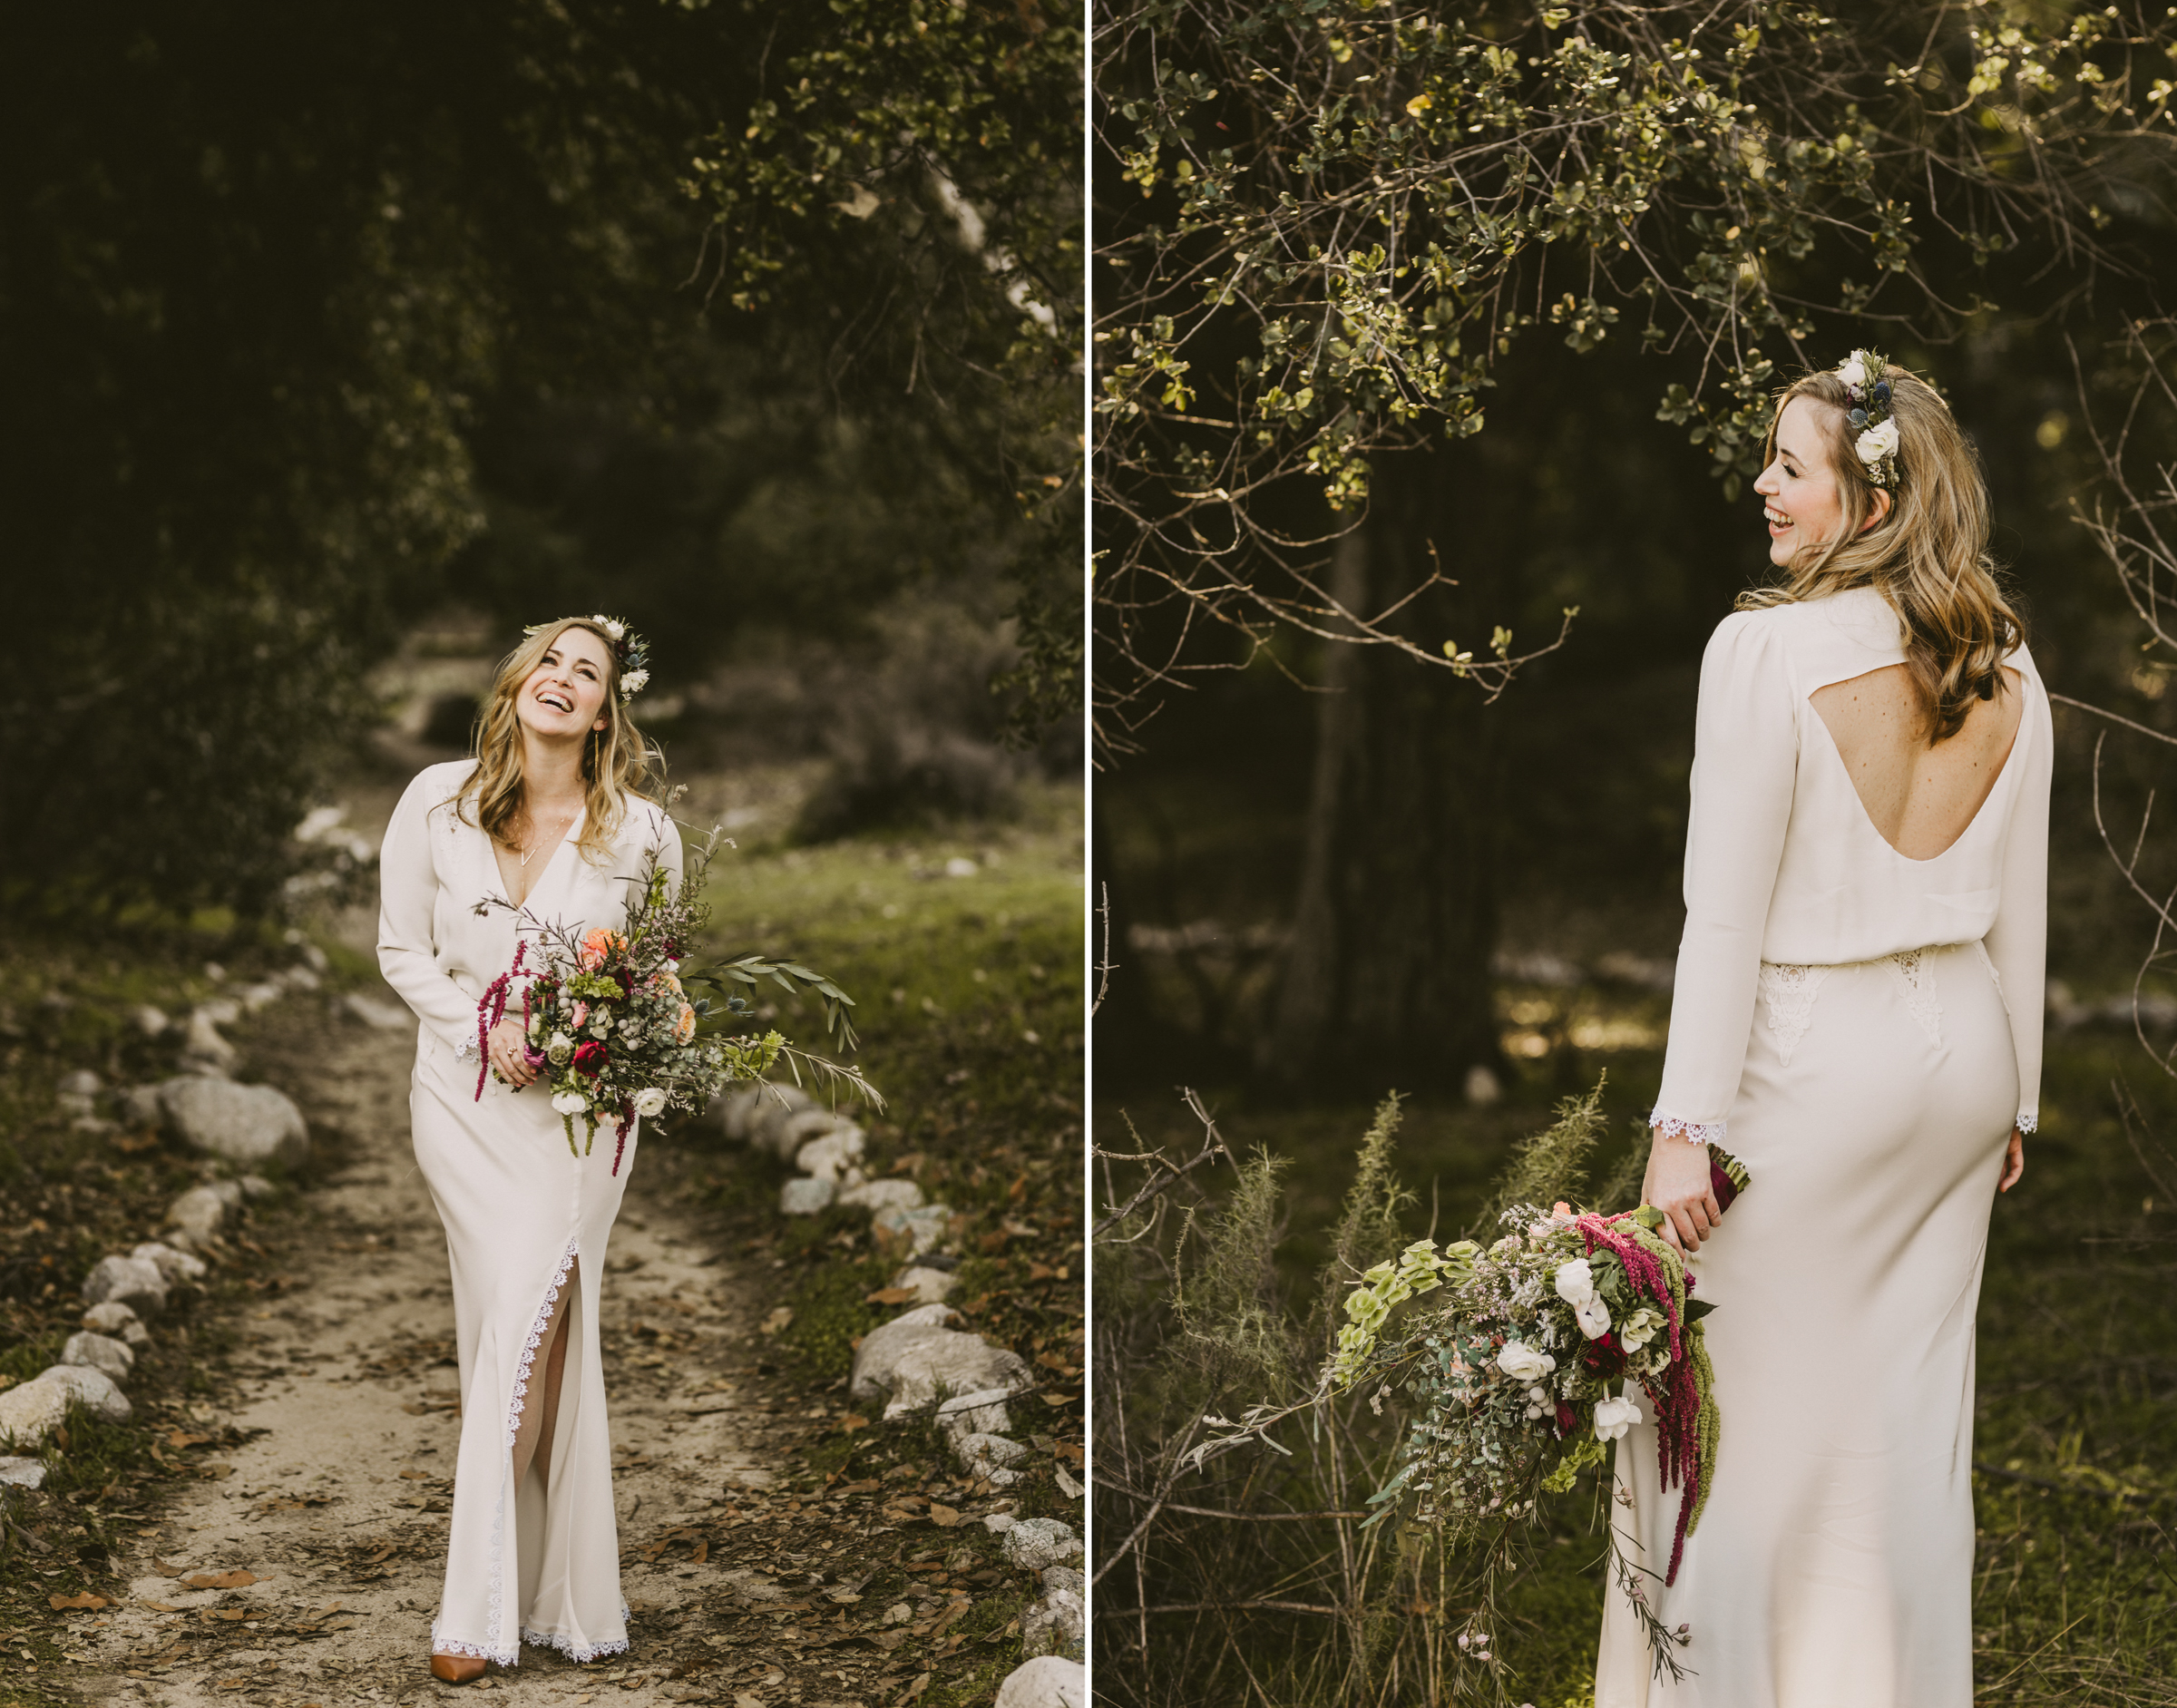 ©Isaiah + Taylor Photography - Intimate Elopement, Eaton Canyon, Los Angeles Wedding Photographer-4.jpg